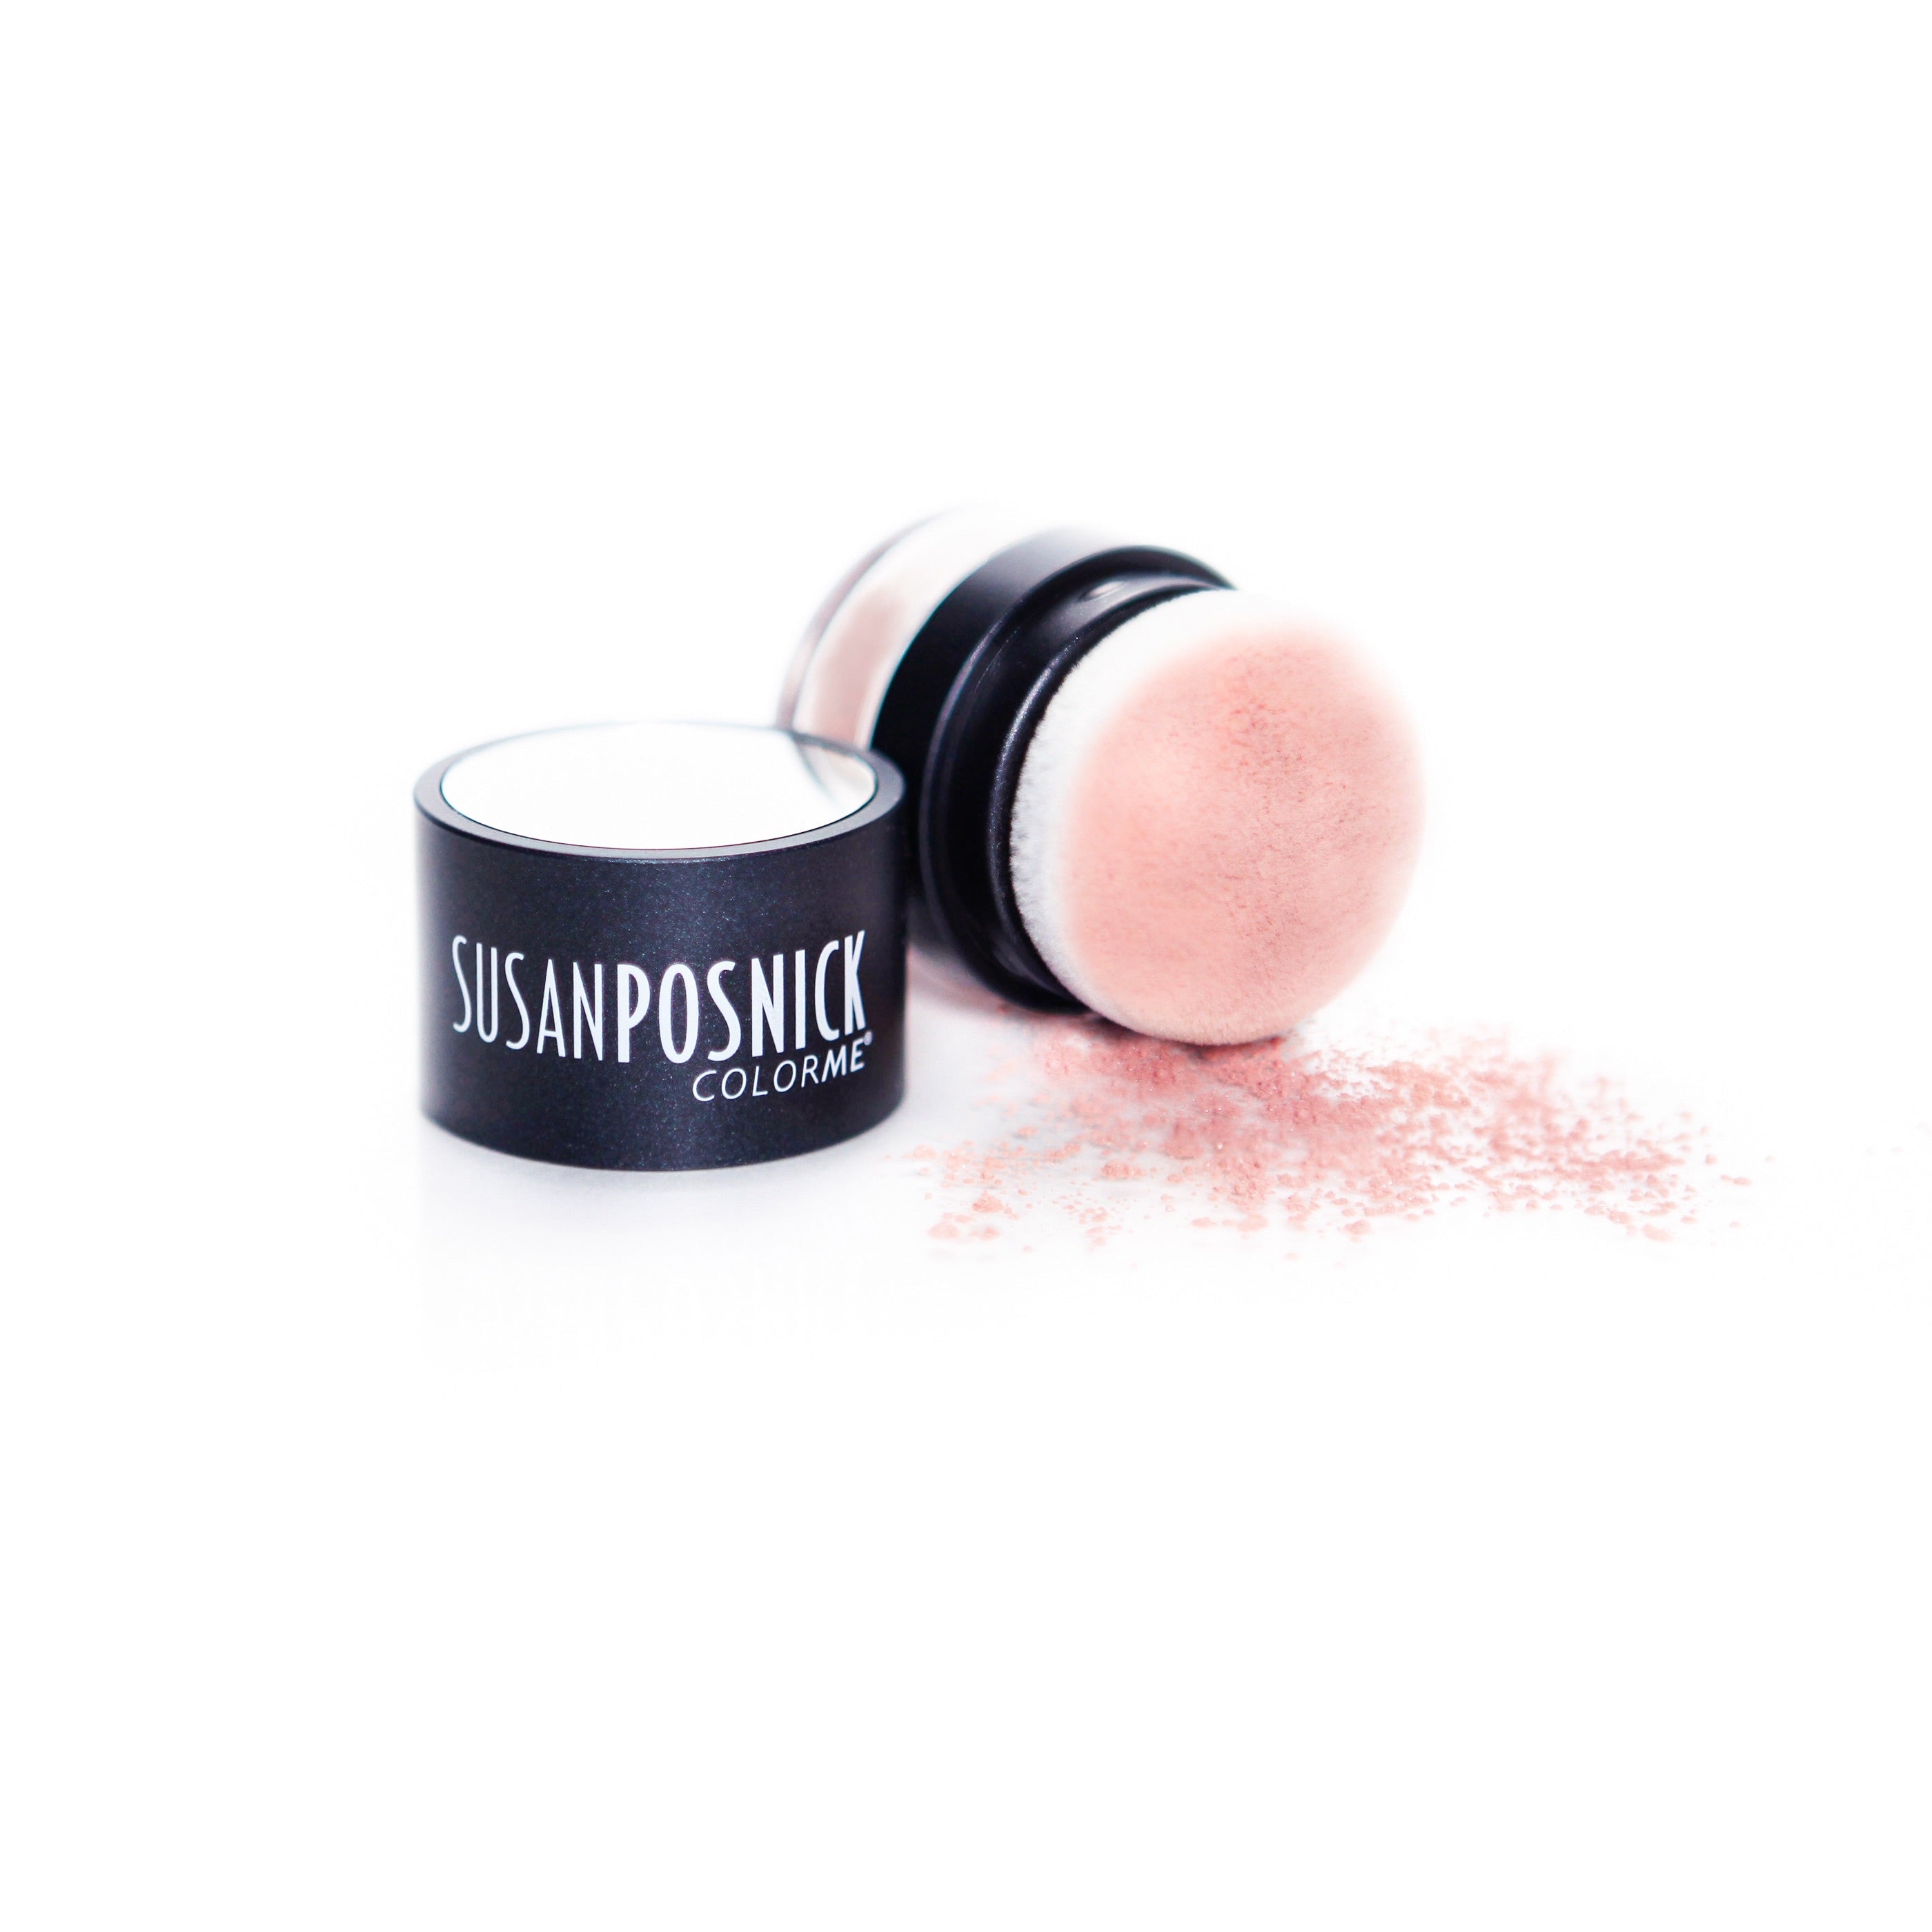 COLORME Mineral Powder Blush, Eyeshadow, Lip Tint & Sun Protection Foundation Susan Posnick Cosmetics 